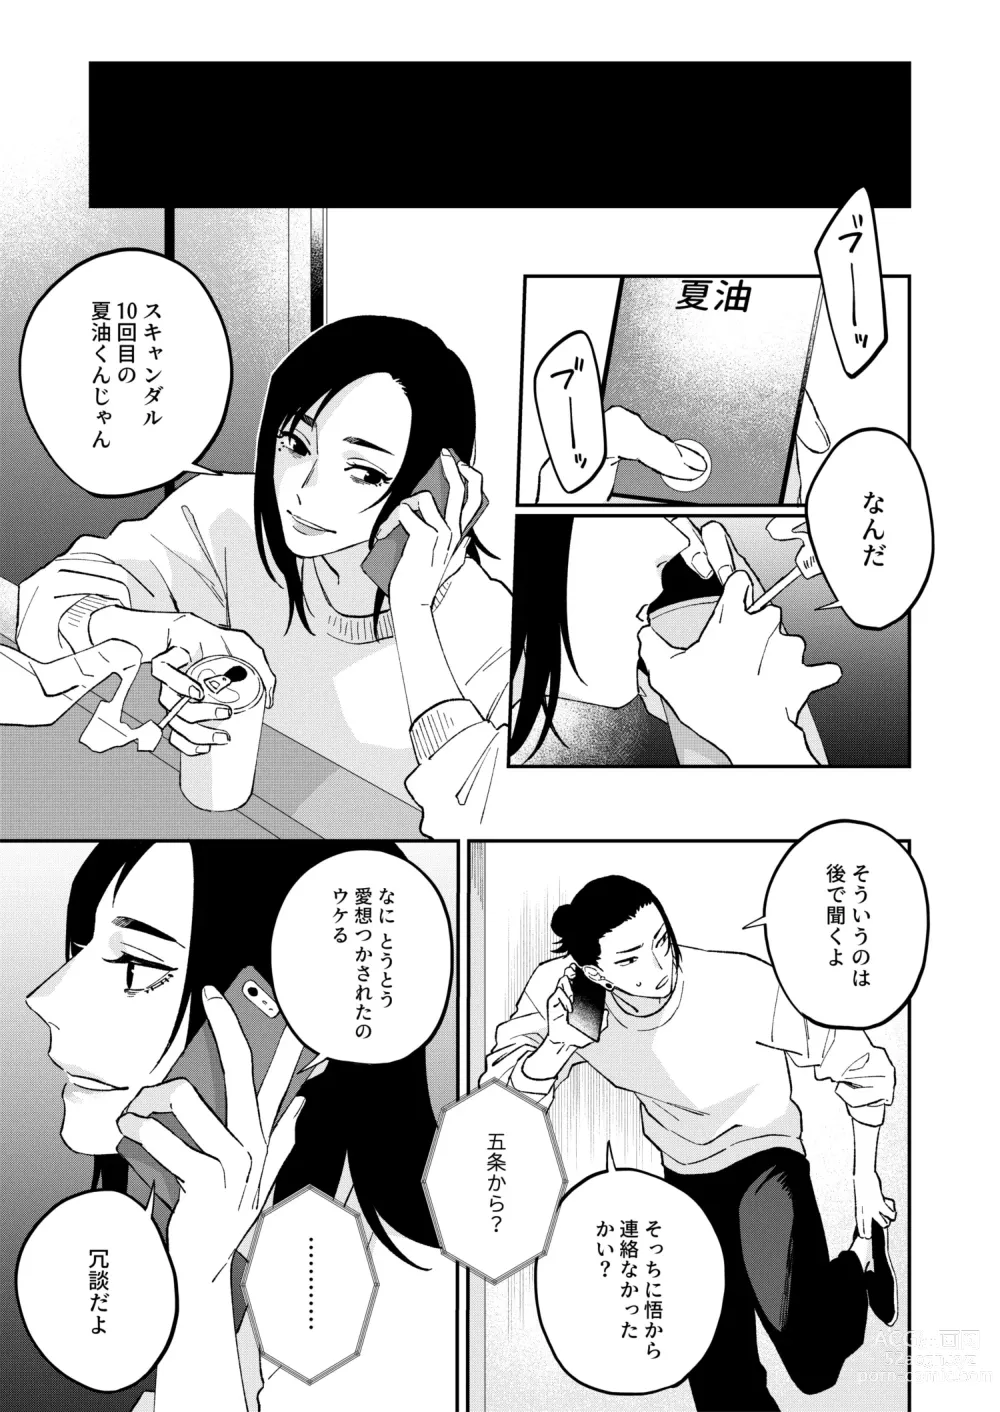 Page 11 of doujinshi GeGo wa Genjitsu nanode Scandal NG desu!!!